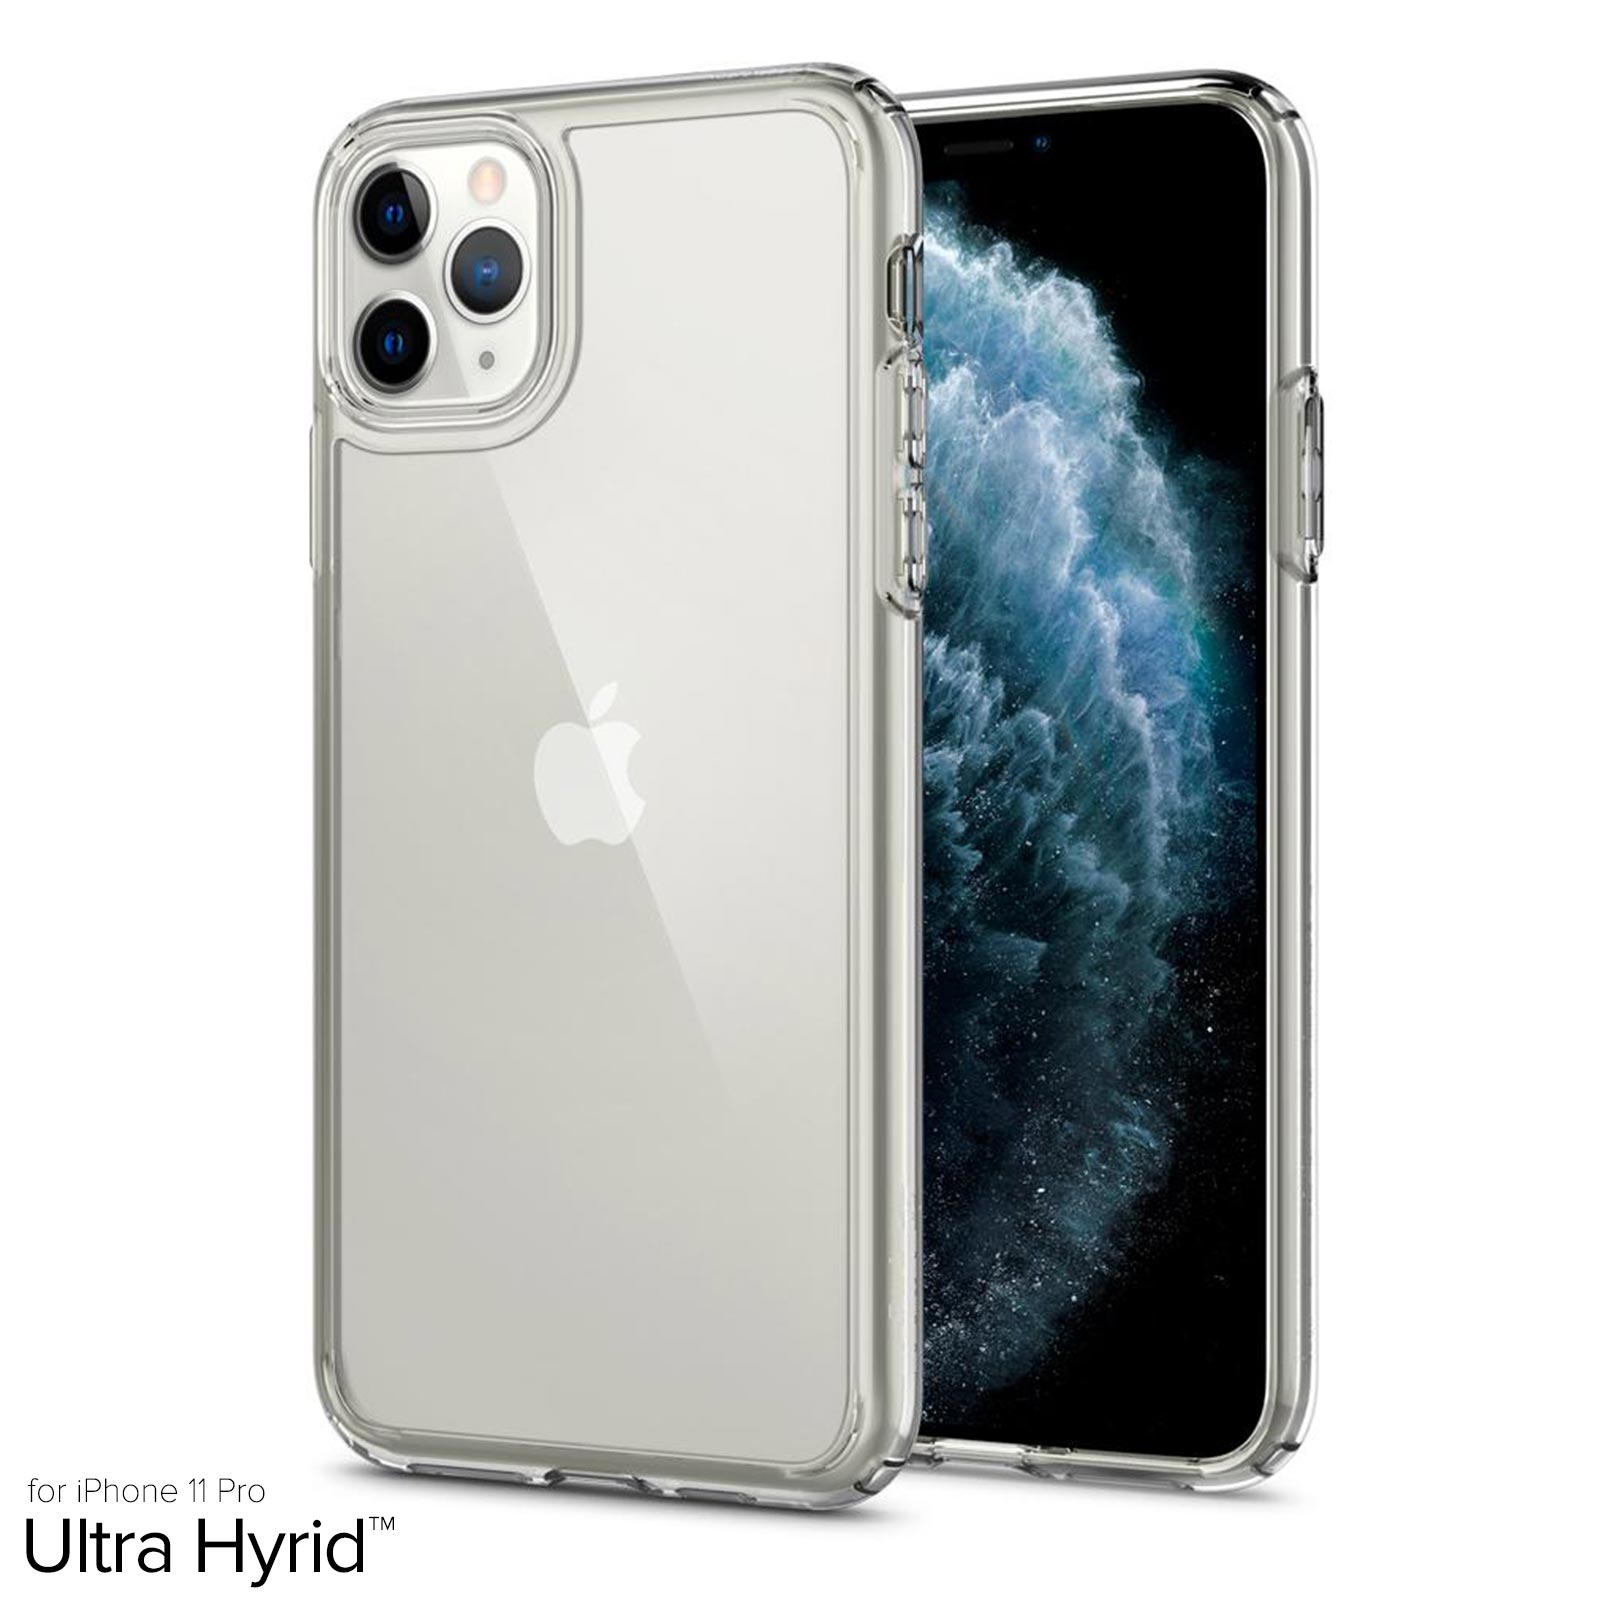 iPhone 11 Pro Case, Genuine SPIGEN Ultra Hybrid Air Cushion Bumper Cover for Apple